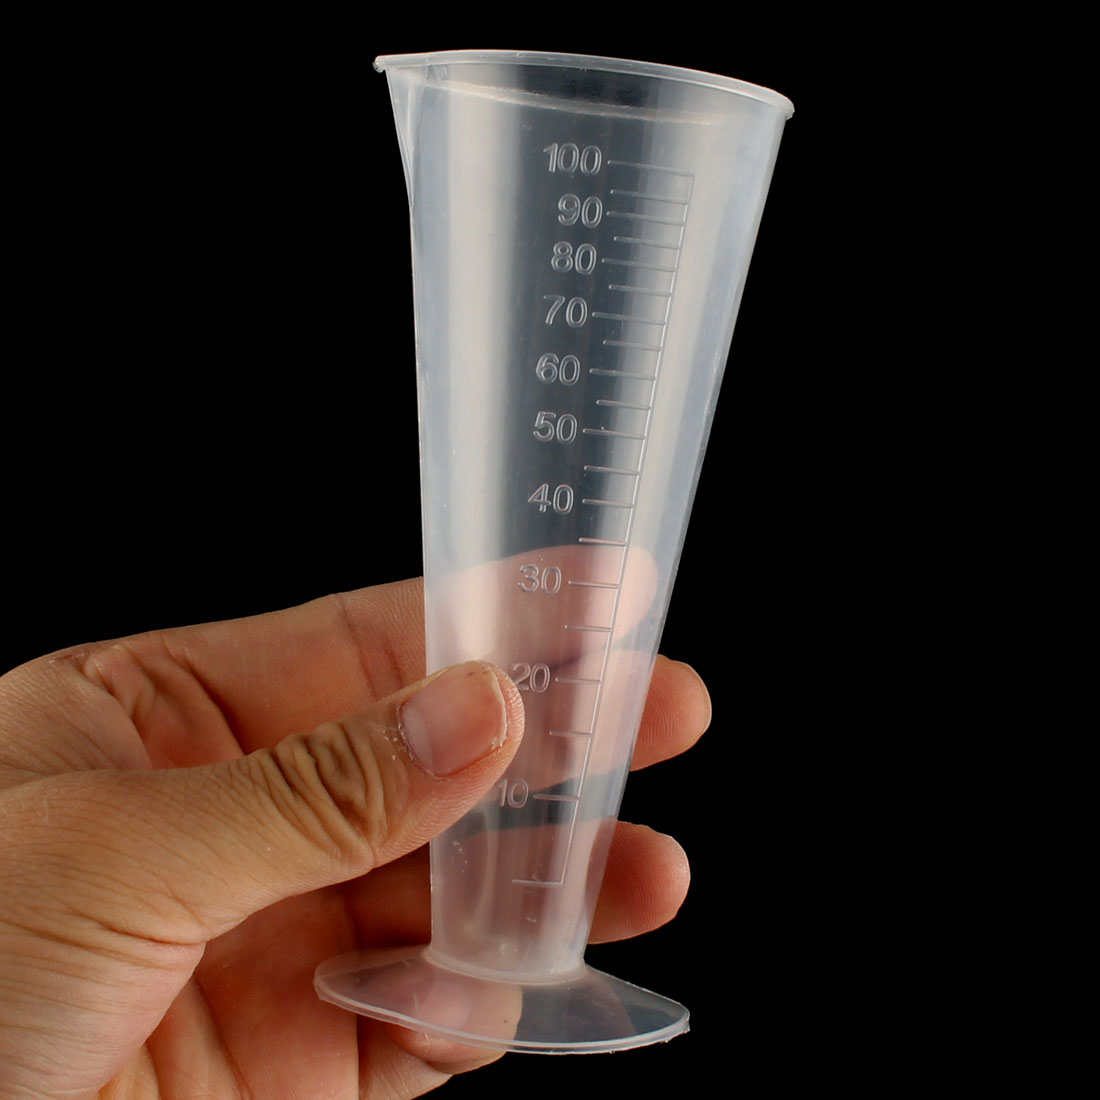 Unique Bargains 100ML Laboratory Experiment Tool Graduated Volume Measuring Cup Beaker